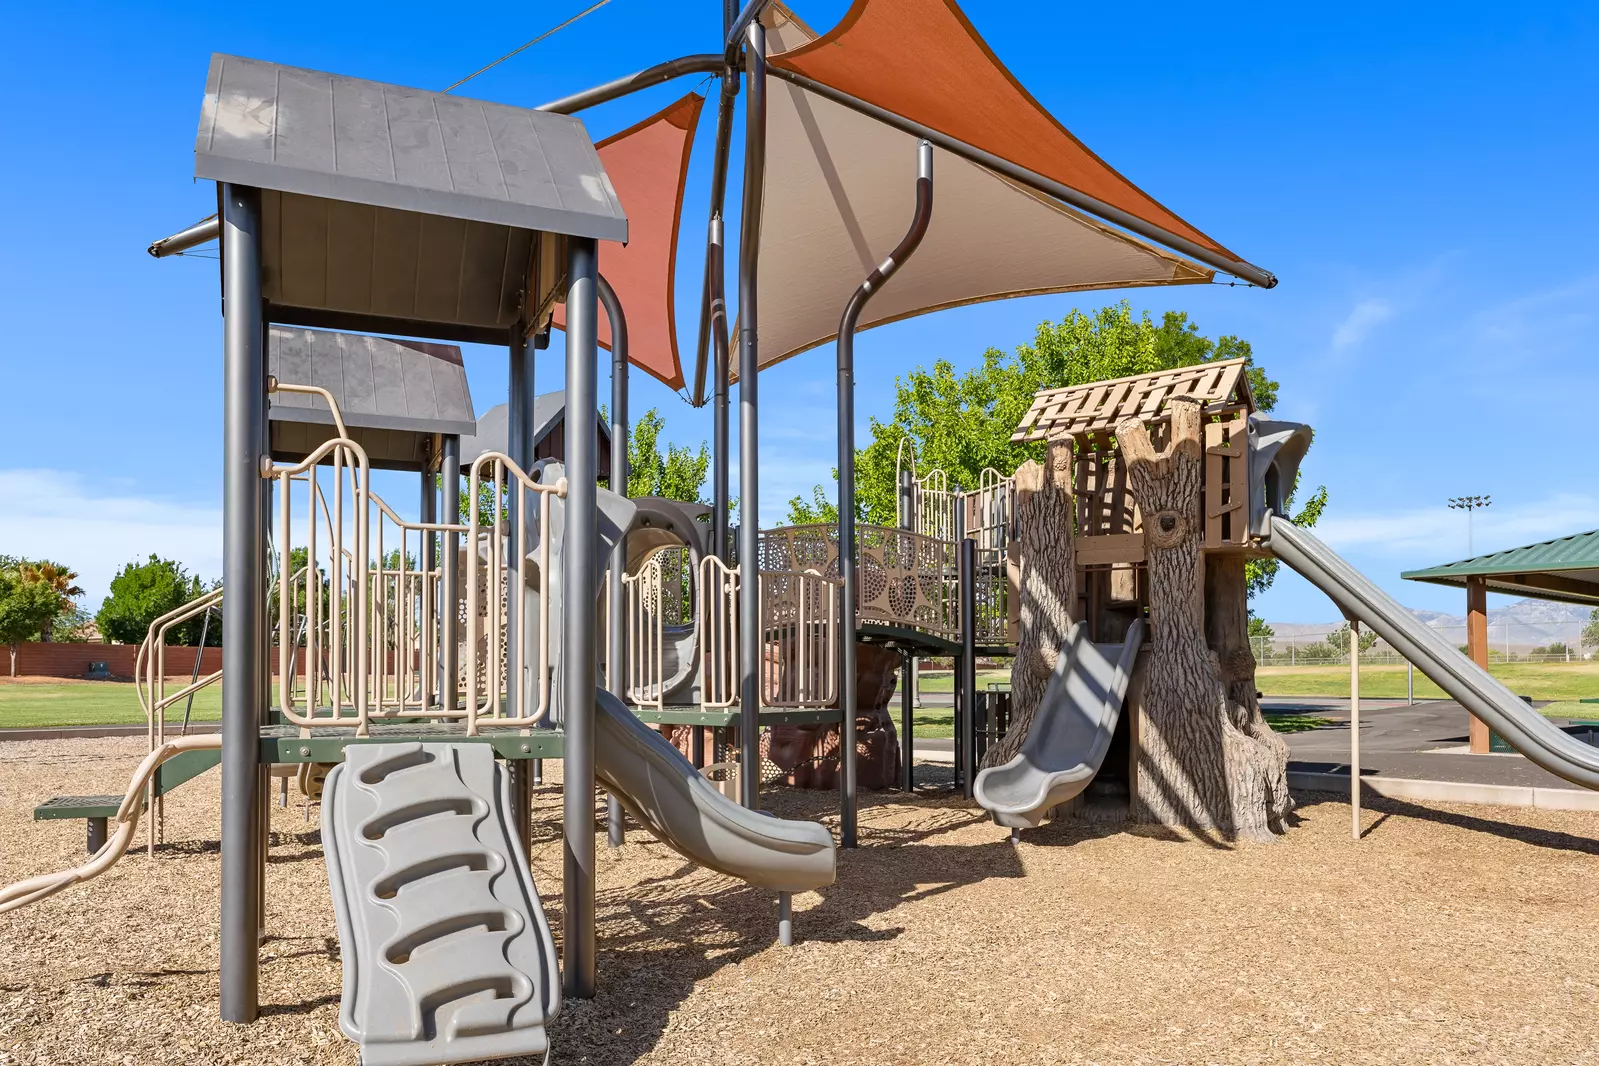 Gubler Park Playground